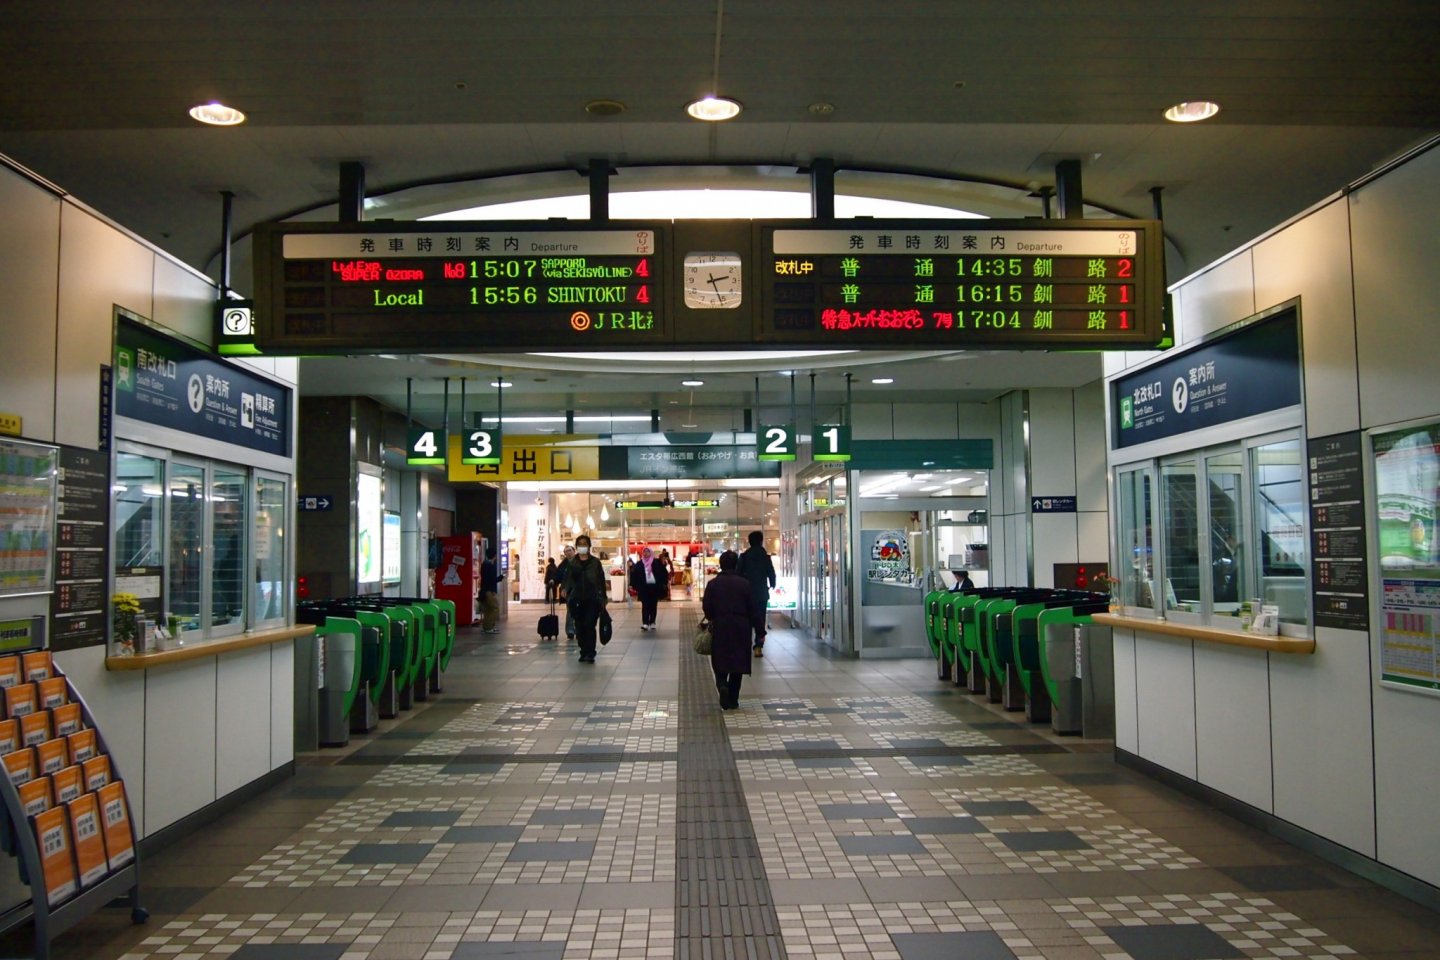 Local lines and rapid express trains from Hokkaido run through Obihiro station